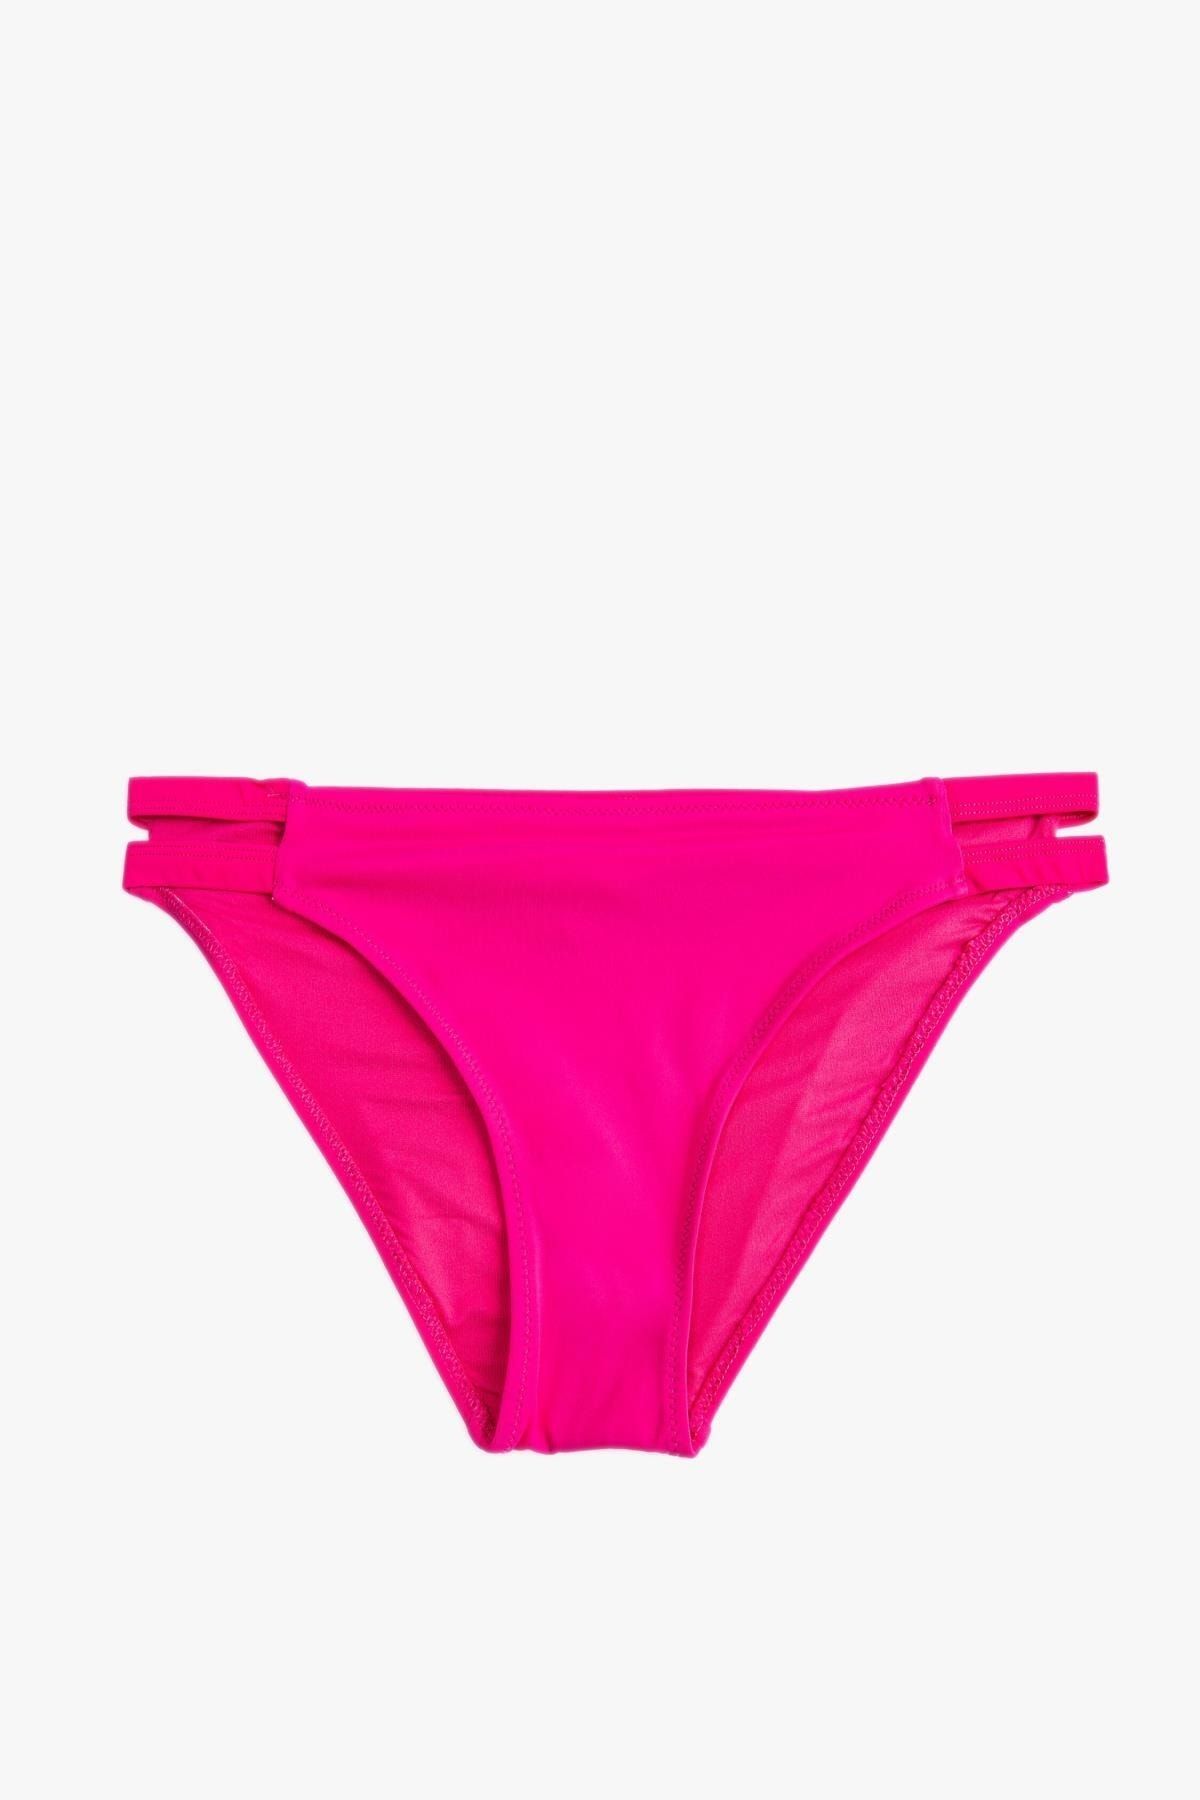 Akbeniz Women's Turned Strapless Pink Bikini 35002 - Trendyol